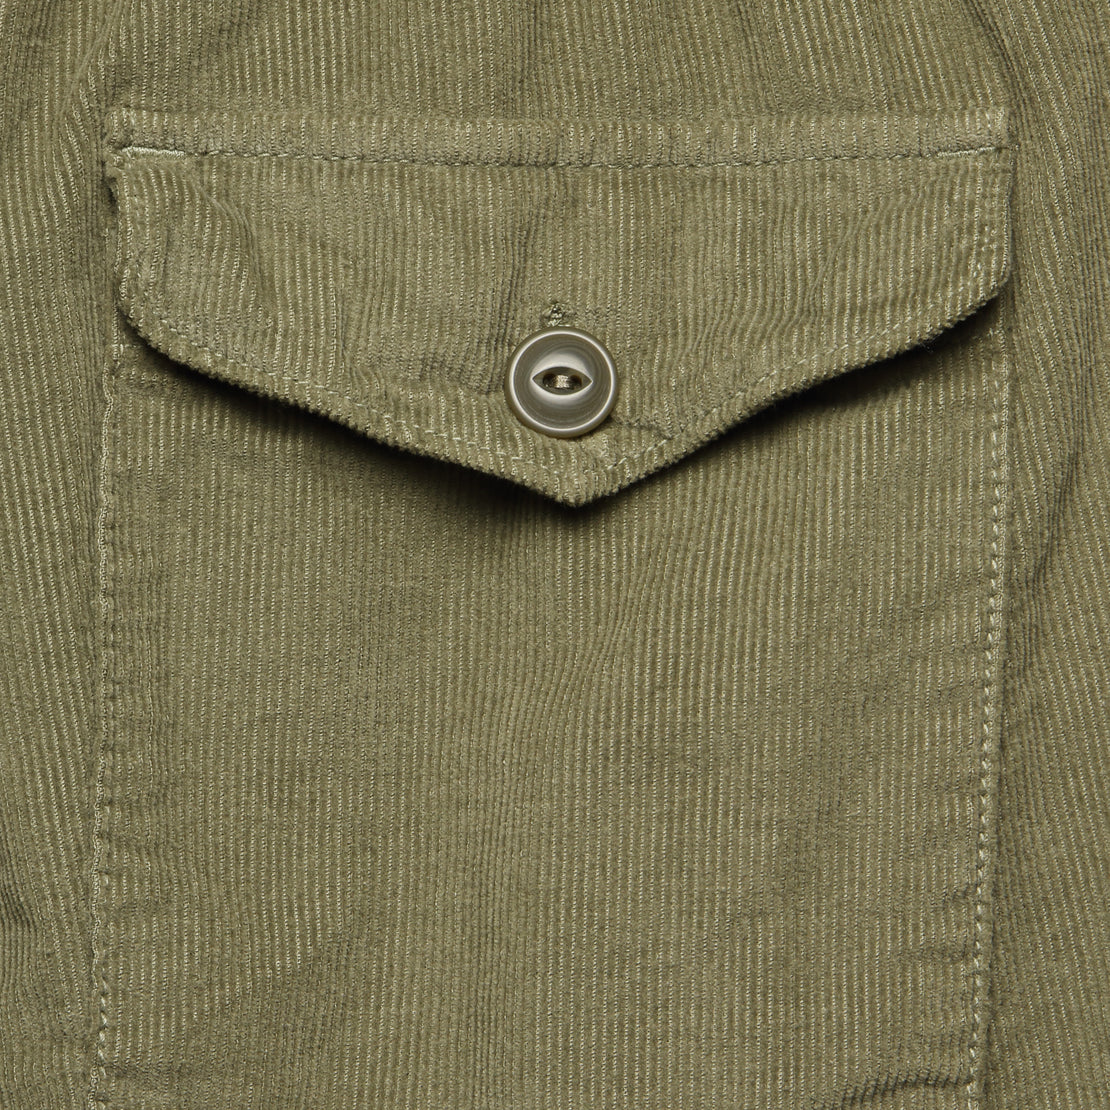 Corduroy Easy Short - Khaki - Save Khaki - STAG Provisions - Shorts - Solid